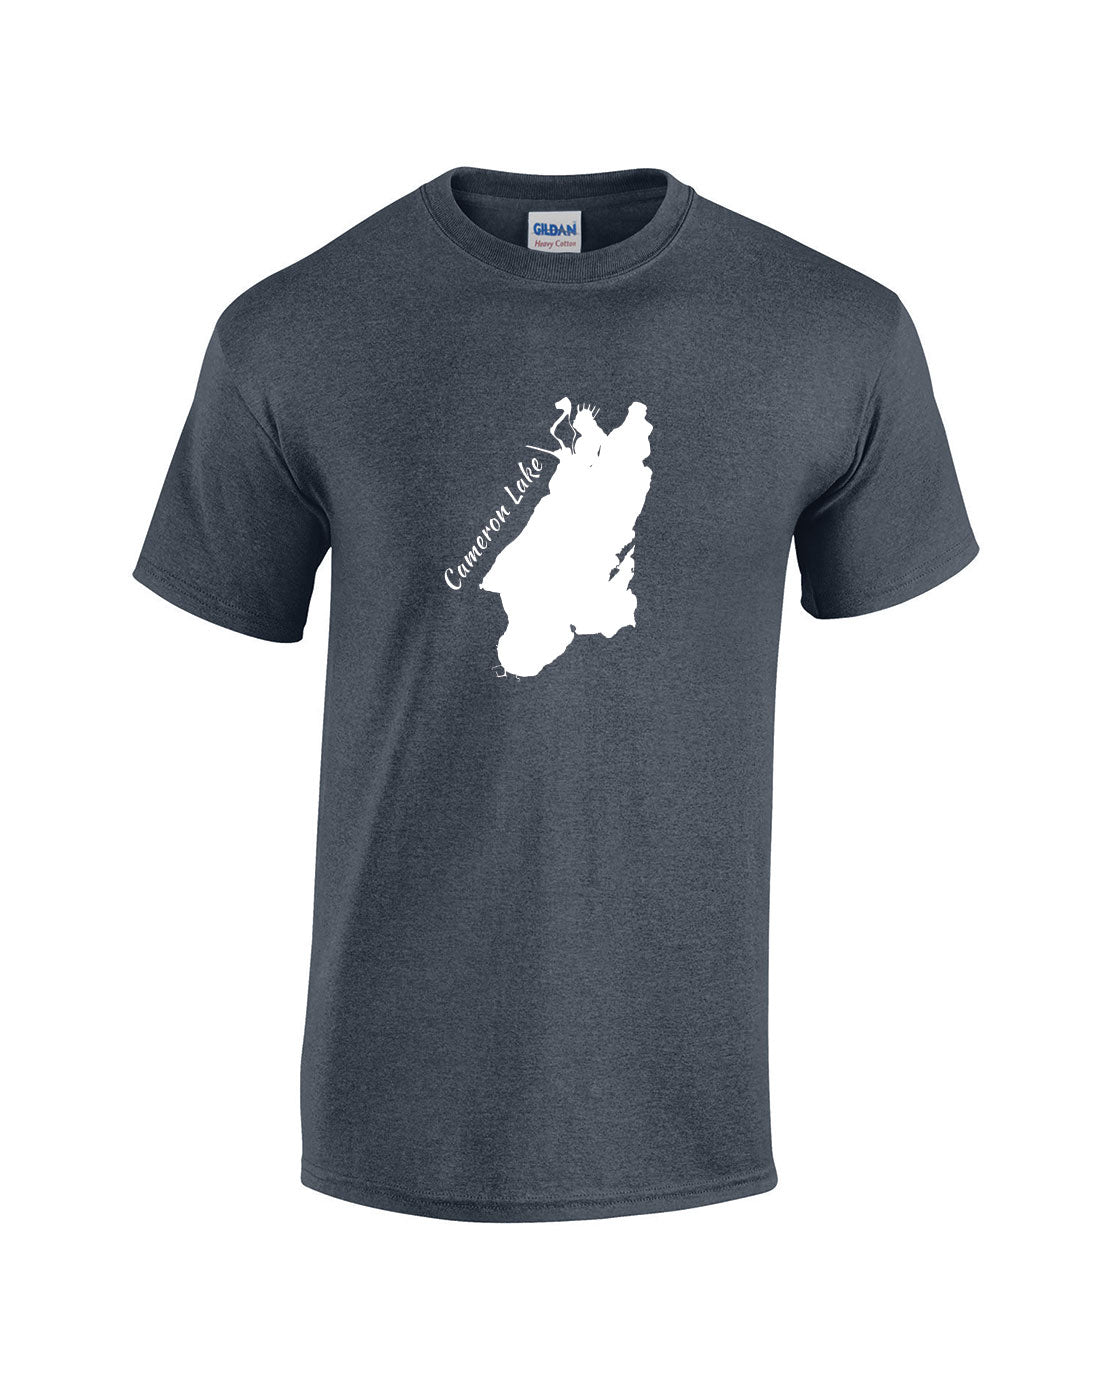 Cameron Lake T-Shirt